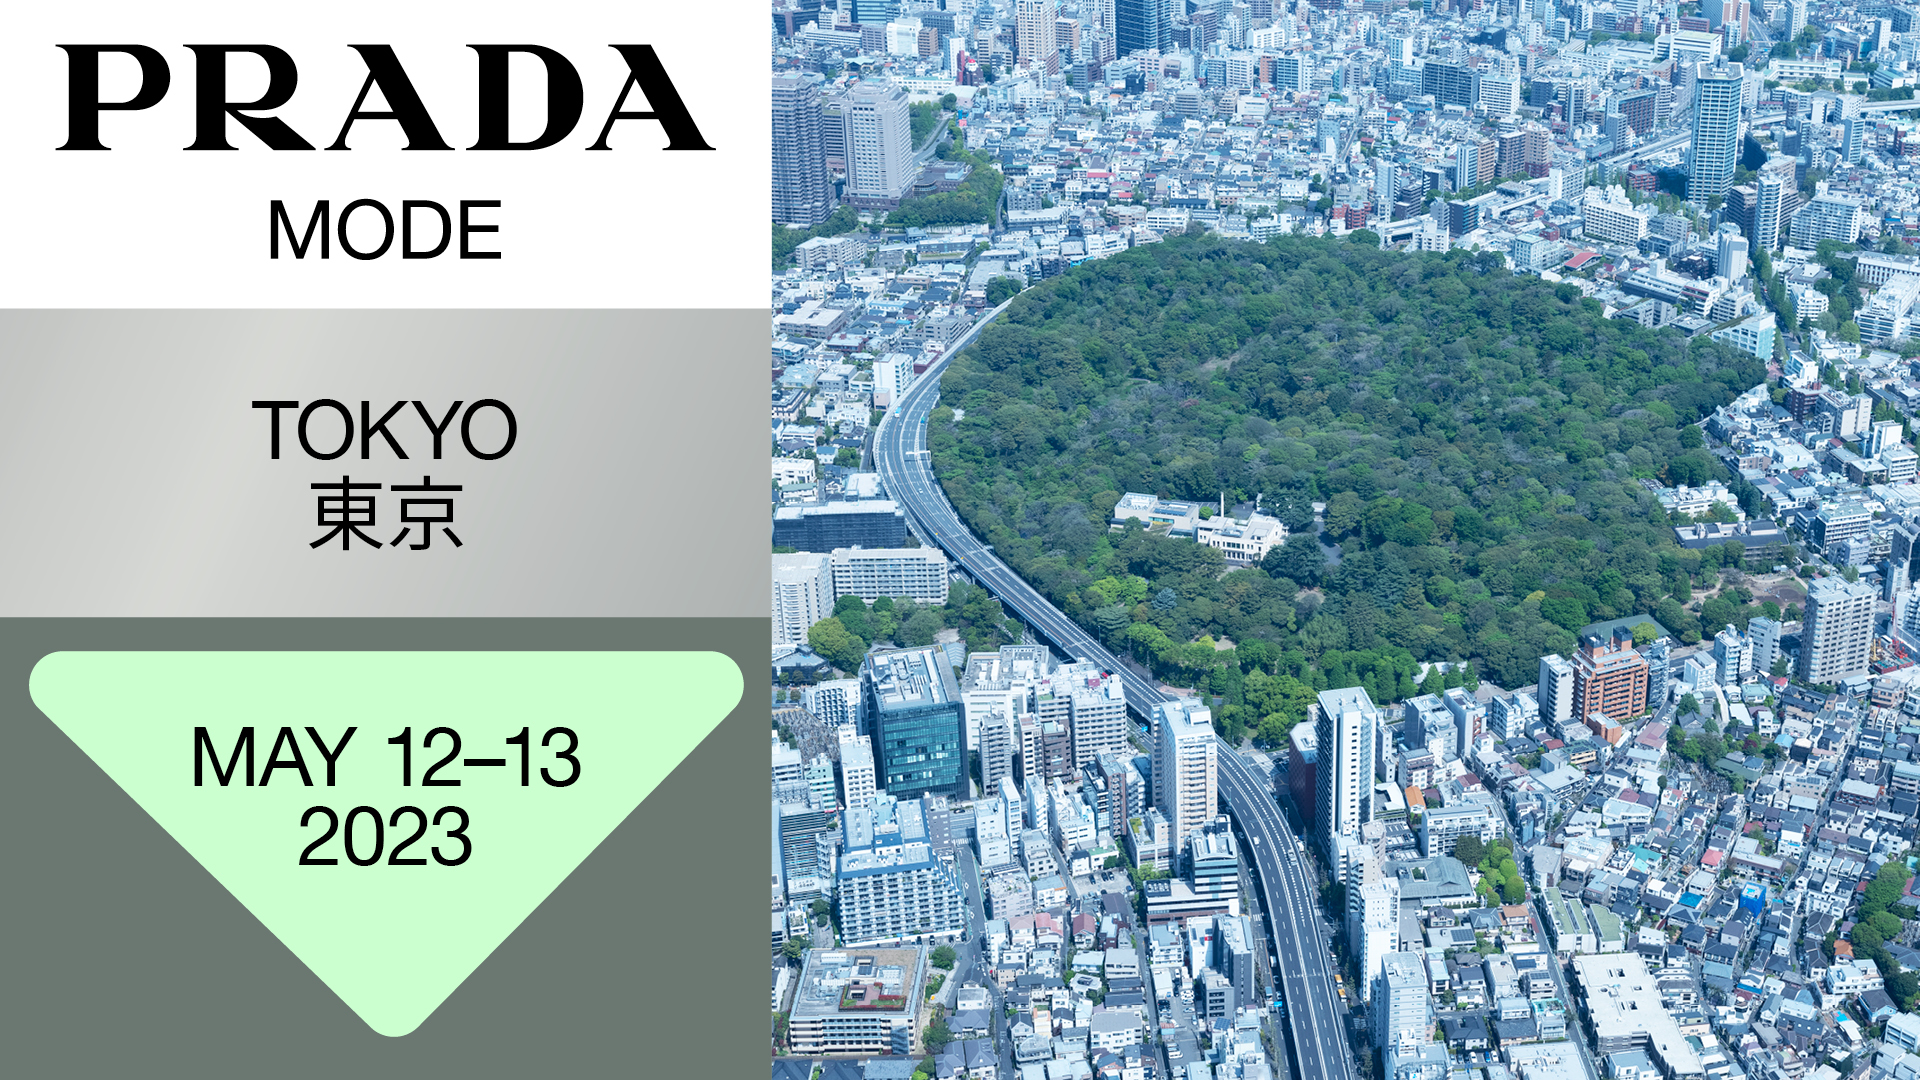 Prada to open Prada Mode Tokyo